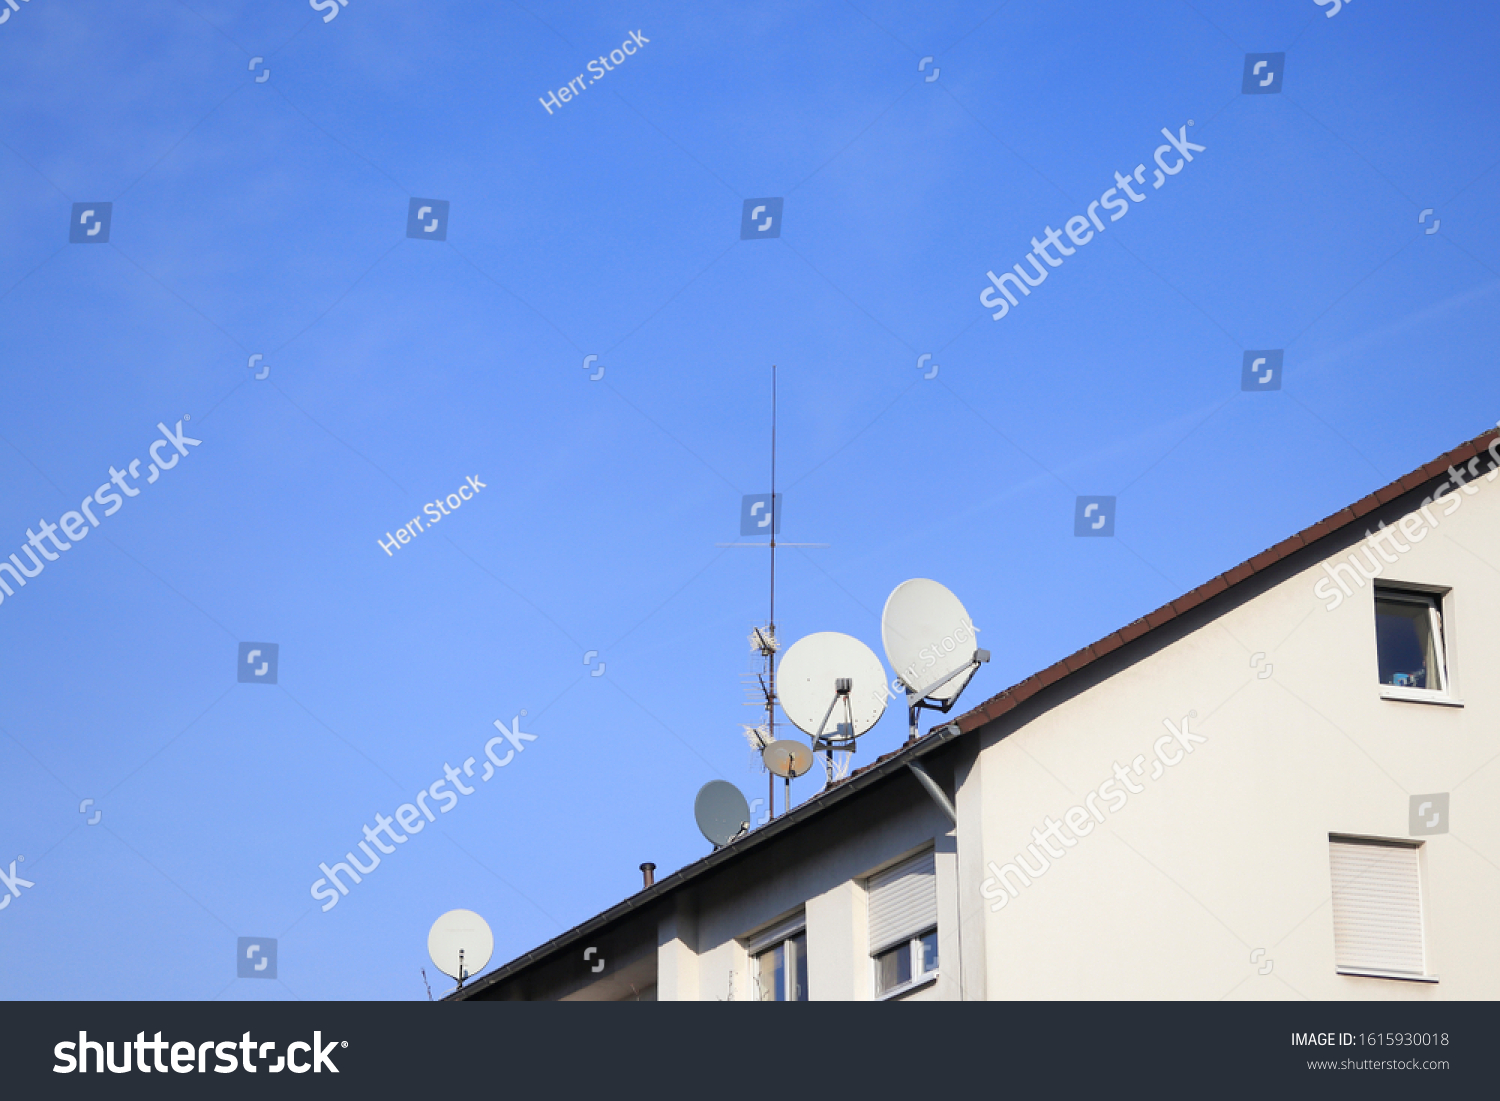 Parabolic Mirror Tv Antenna On House Technology Stock Image